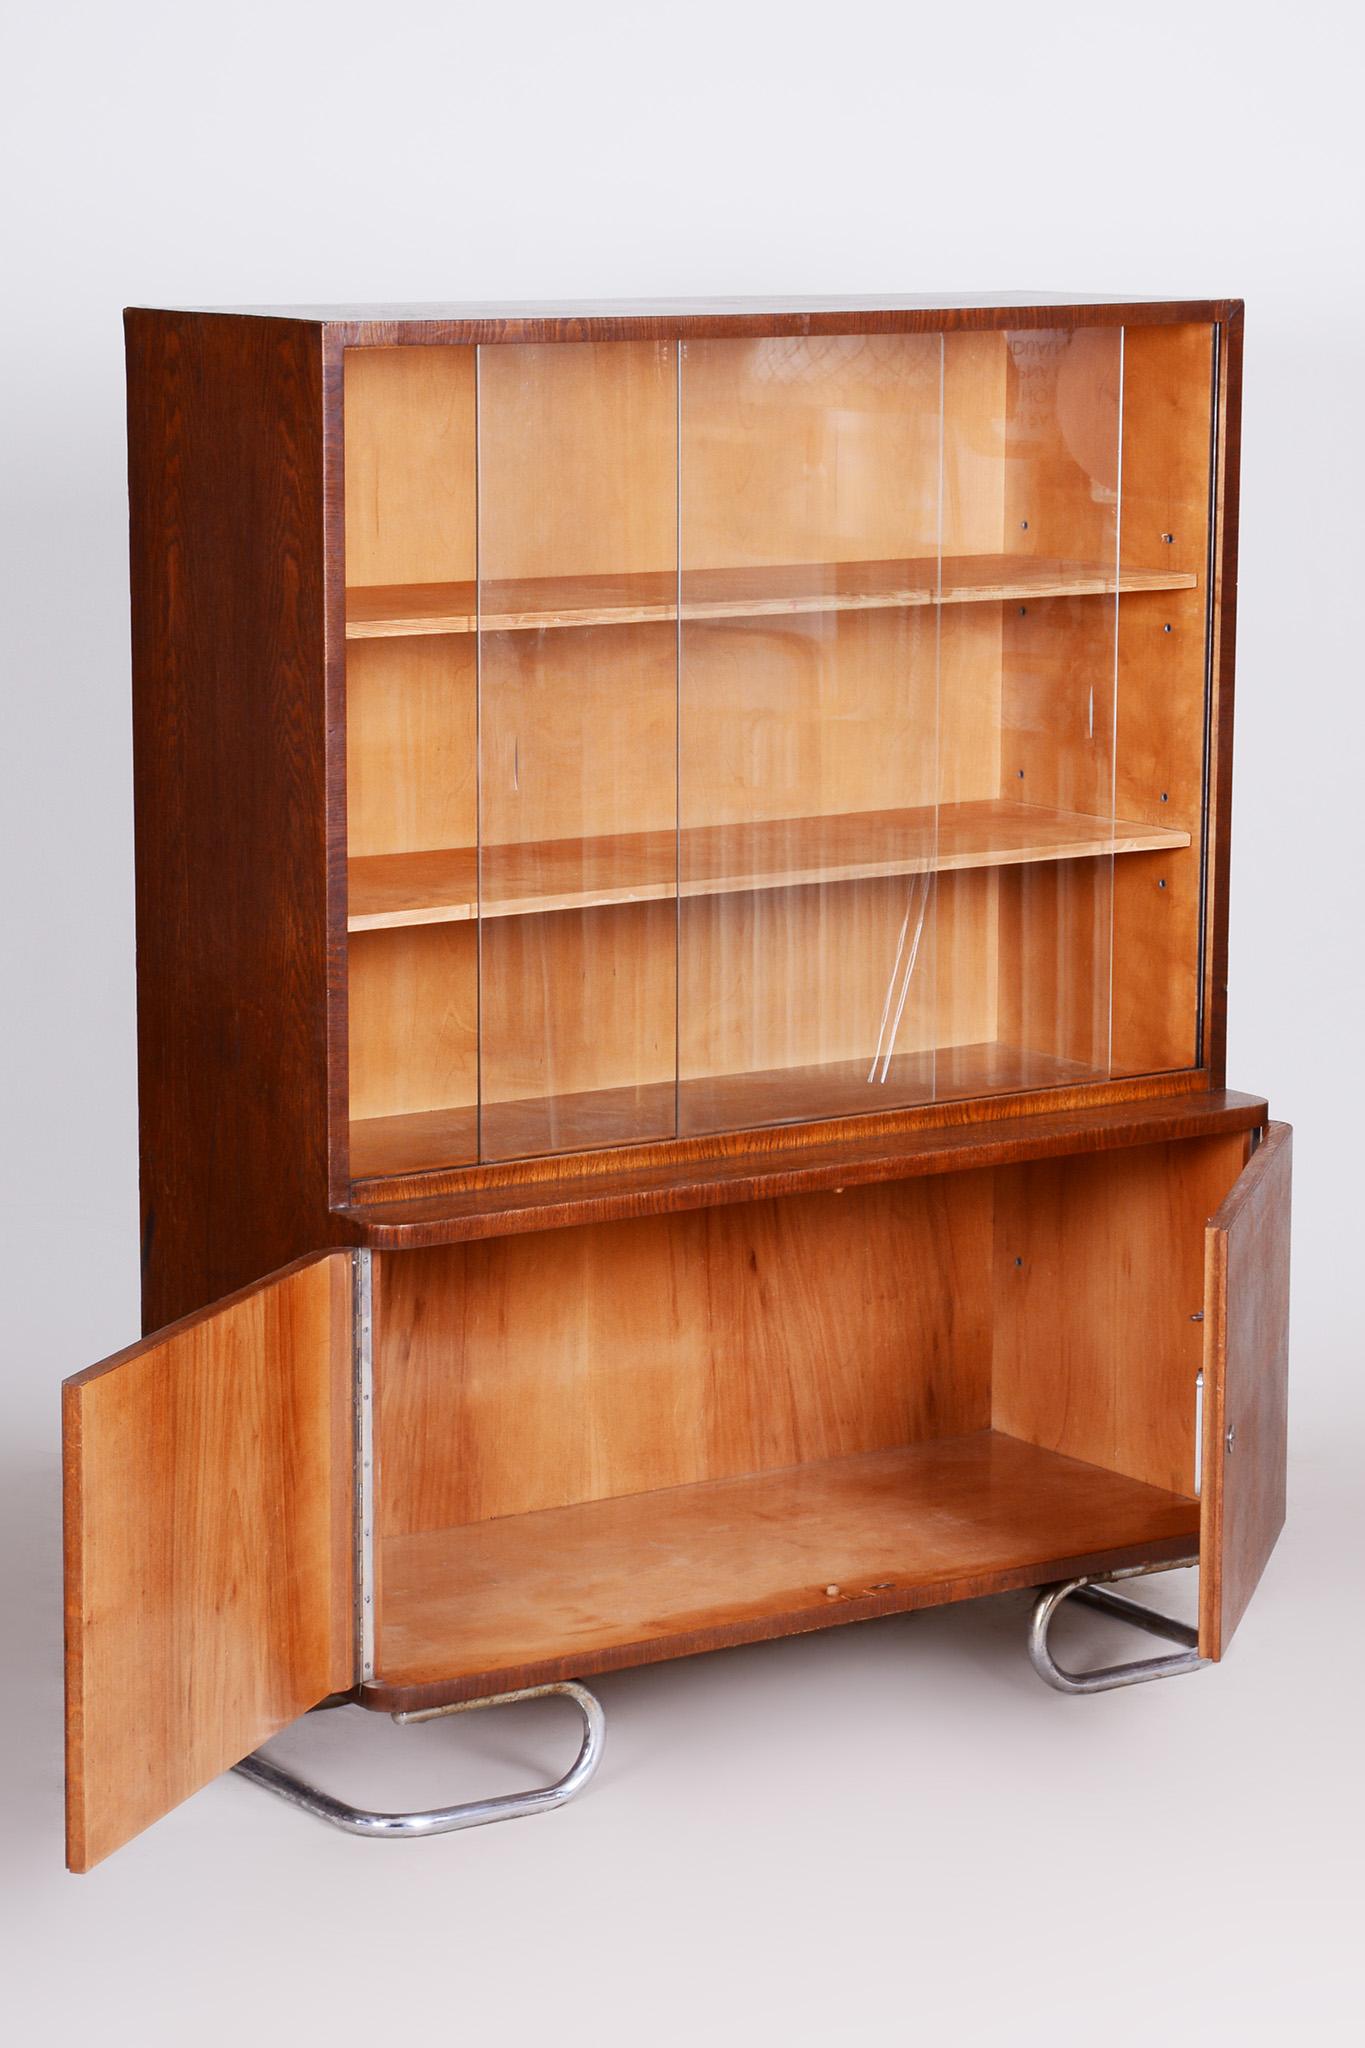 Vichr a Spol Art Deco Bookcase Made in 1930s Czechia For Sale 5